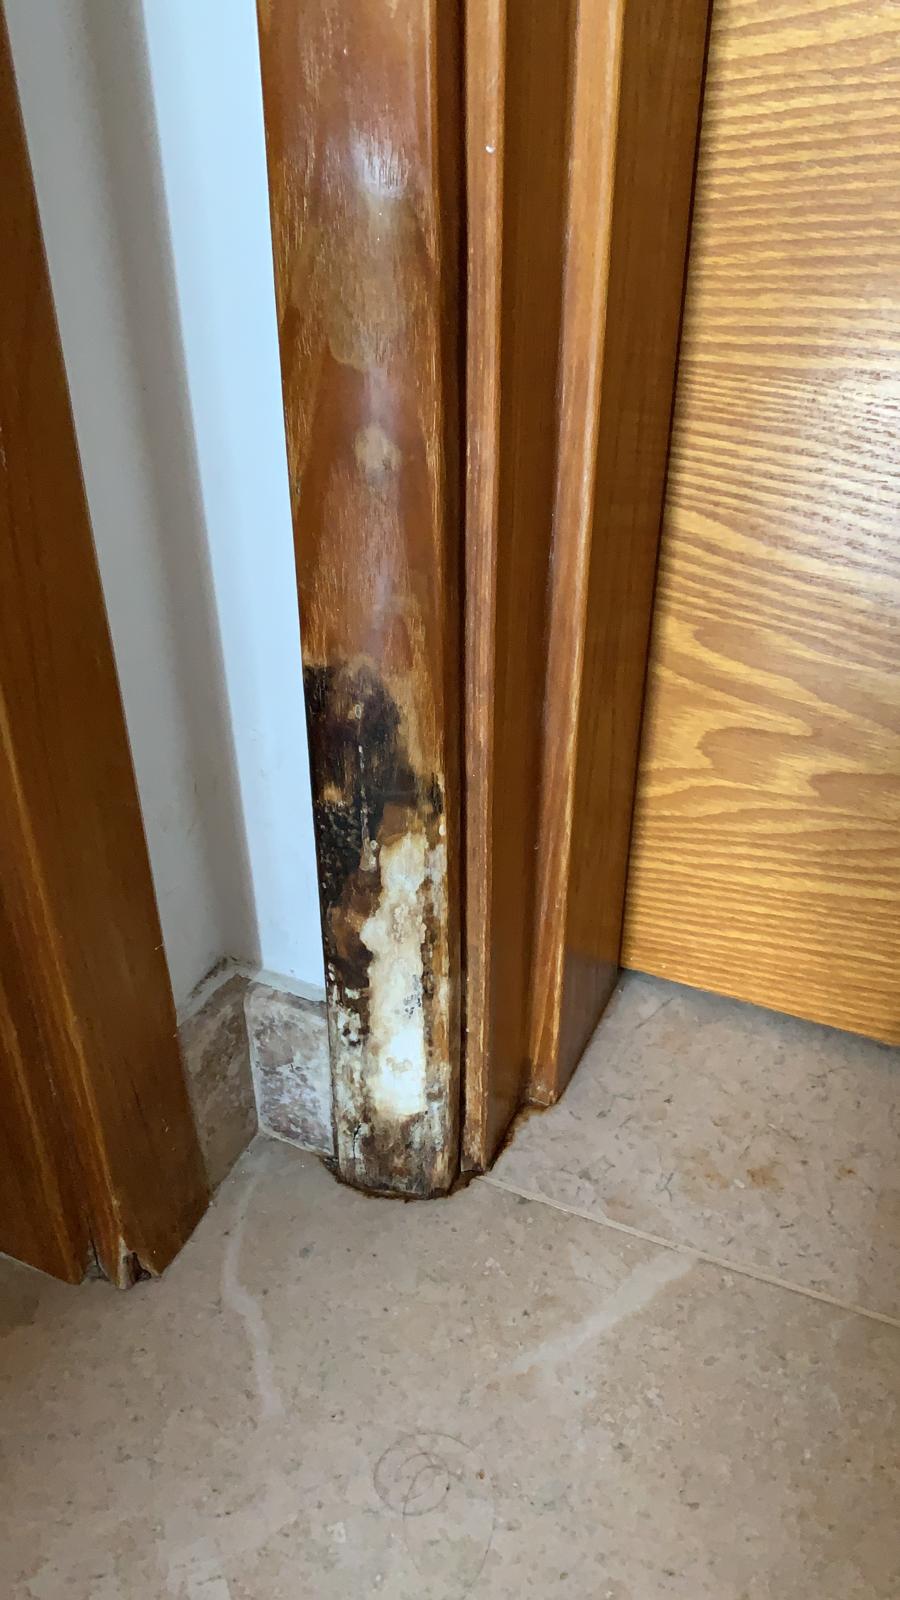 Wooden Door frame damage by Termites